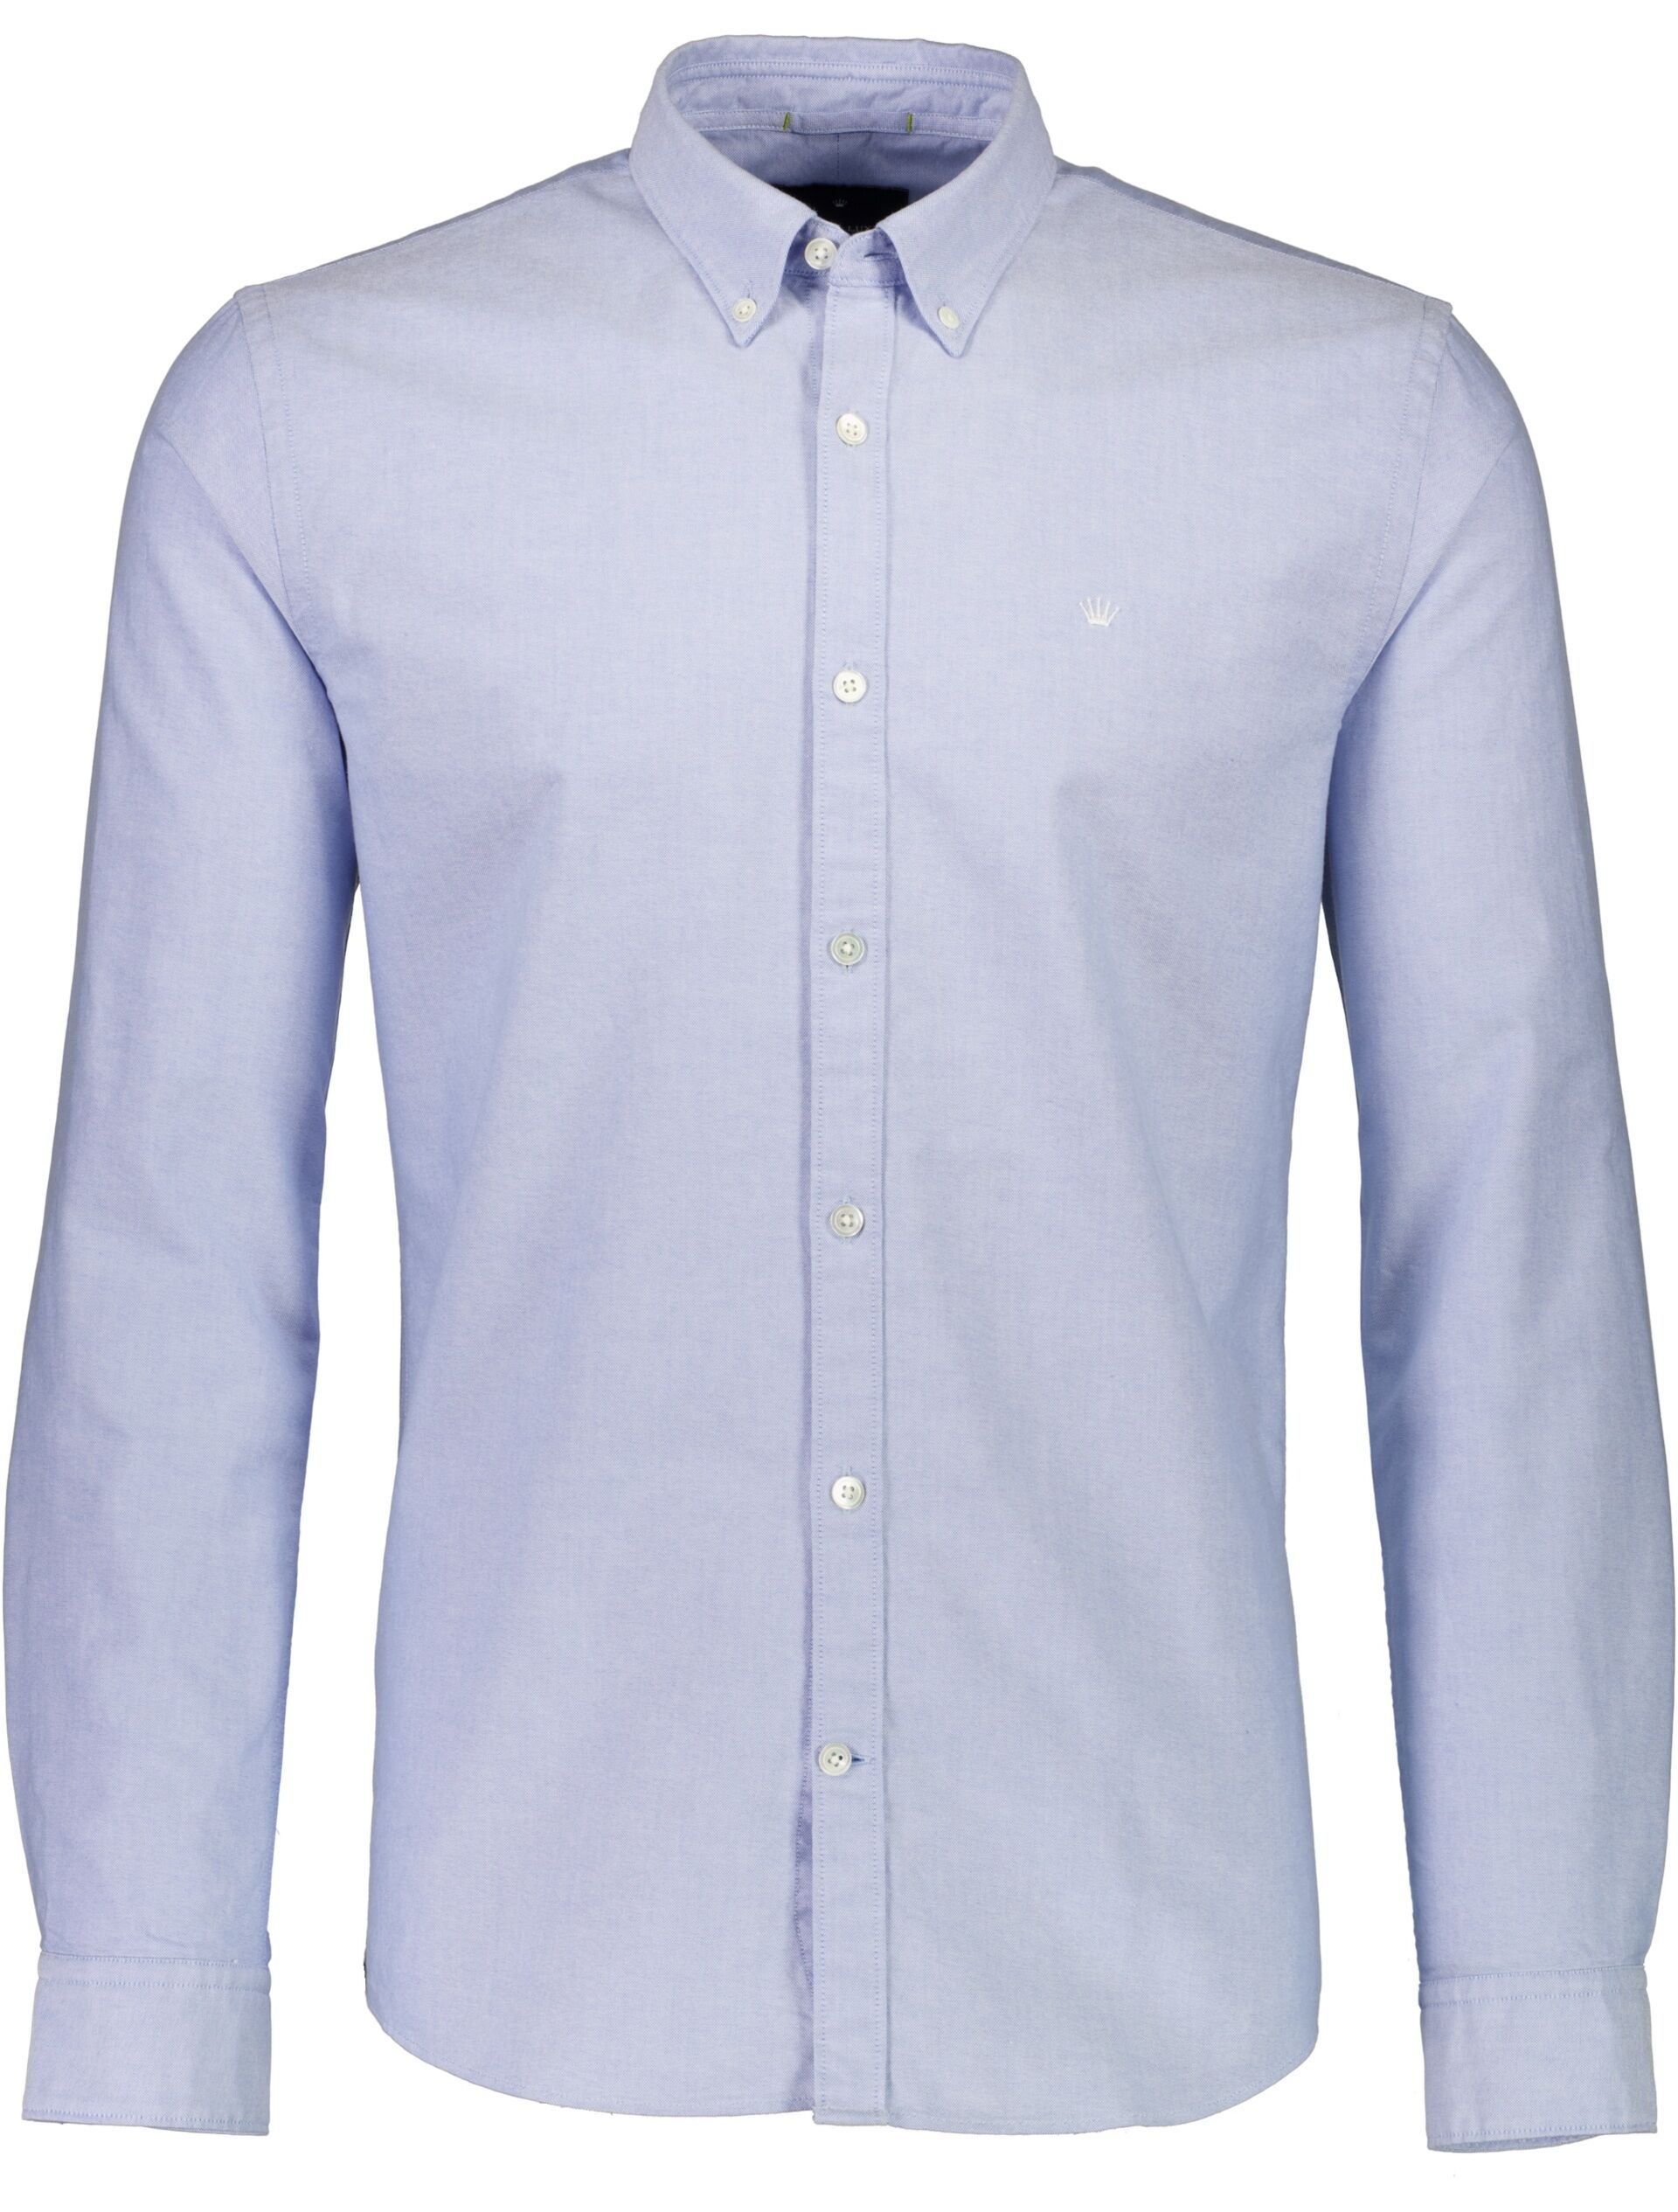 Oxford shirt 60-205020